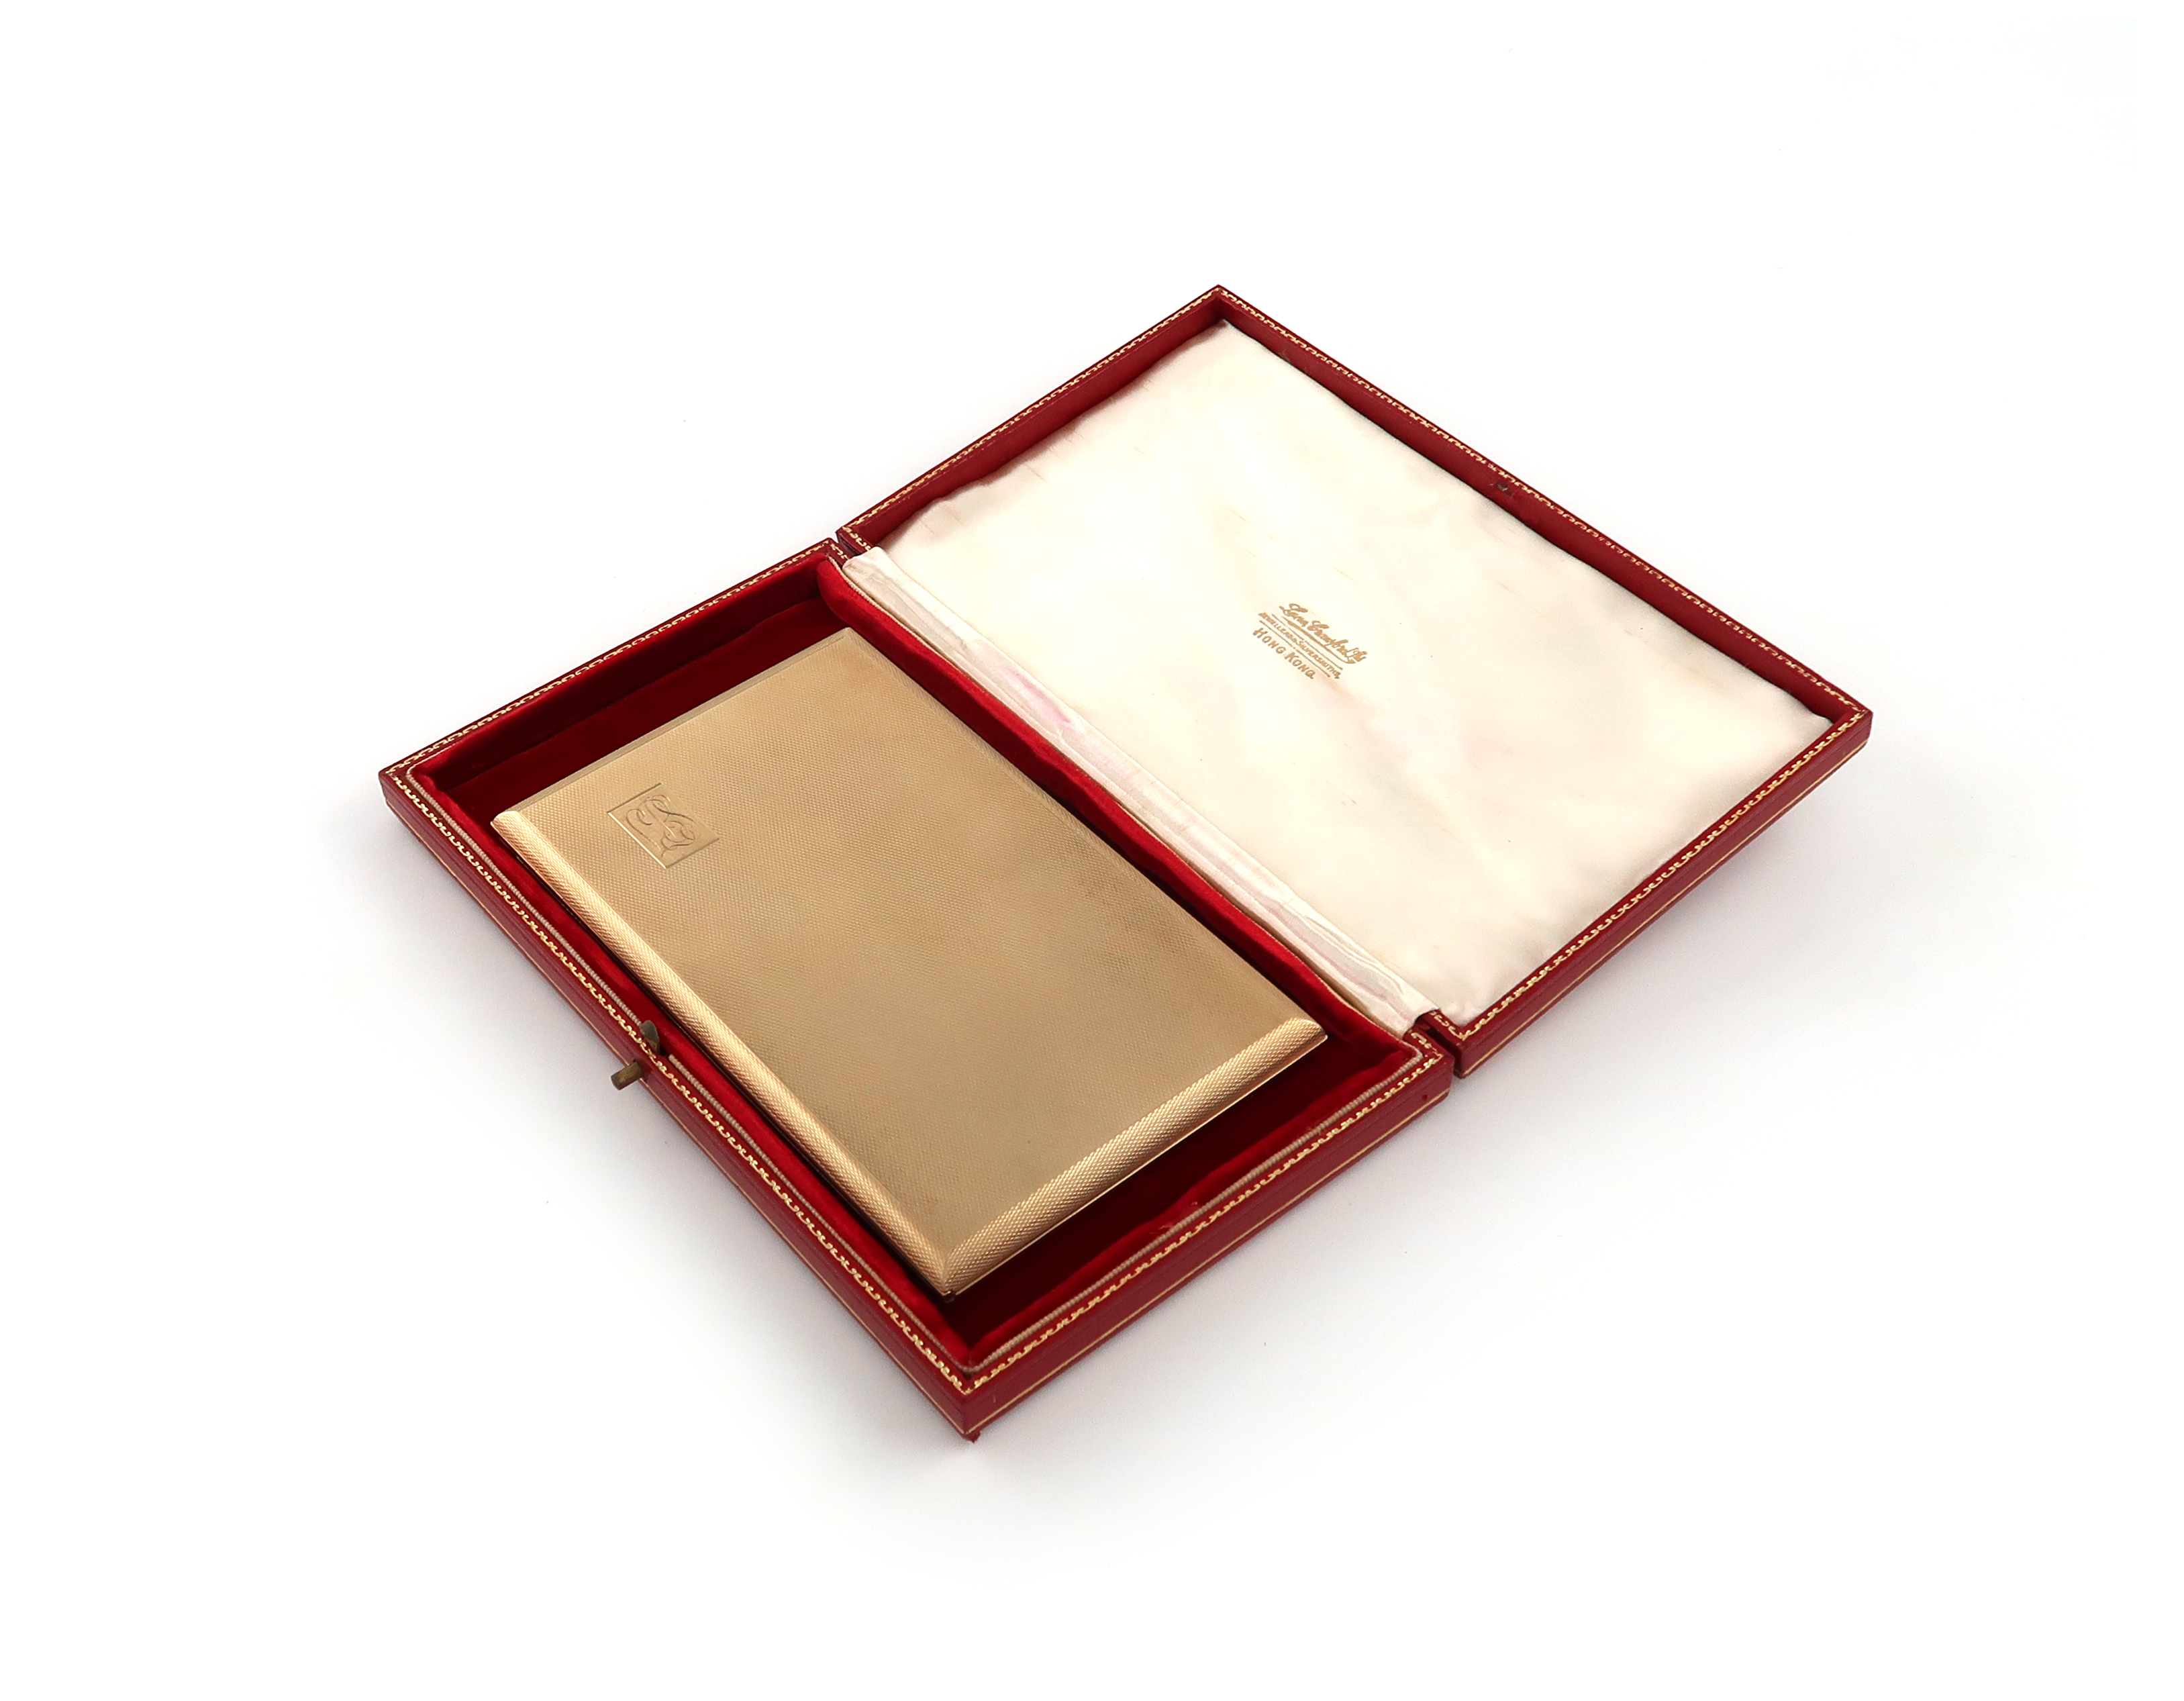 A 9 carat gold presentation cigarette case, maker's mark of KW, London 1955, retailed by Lane,